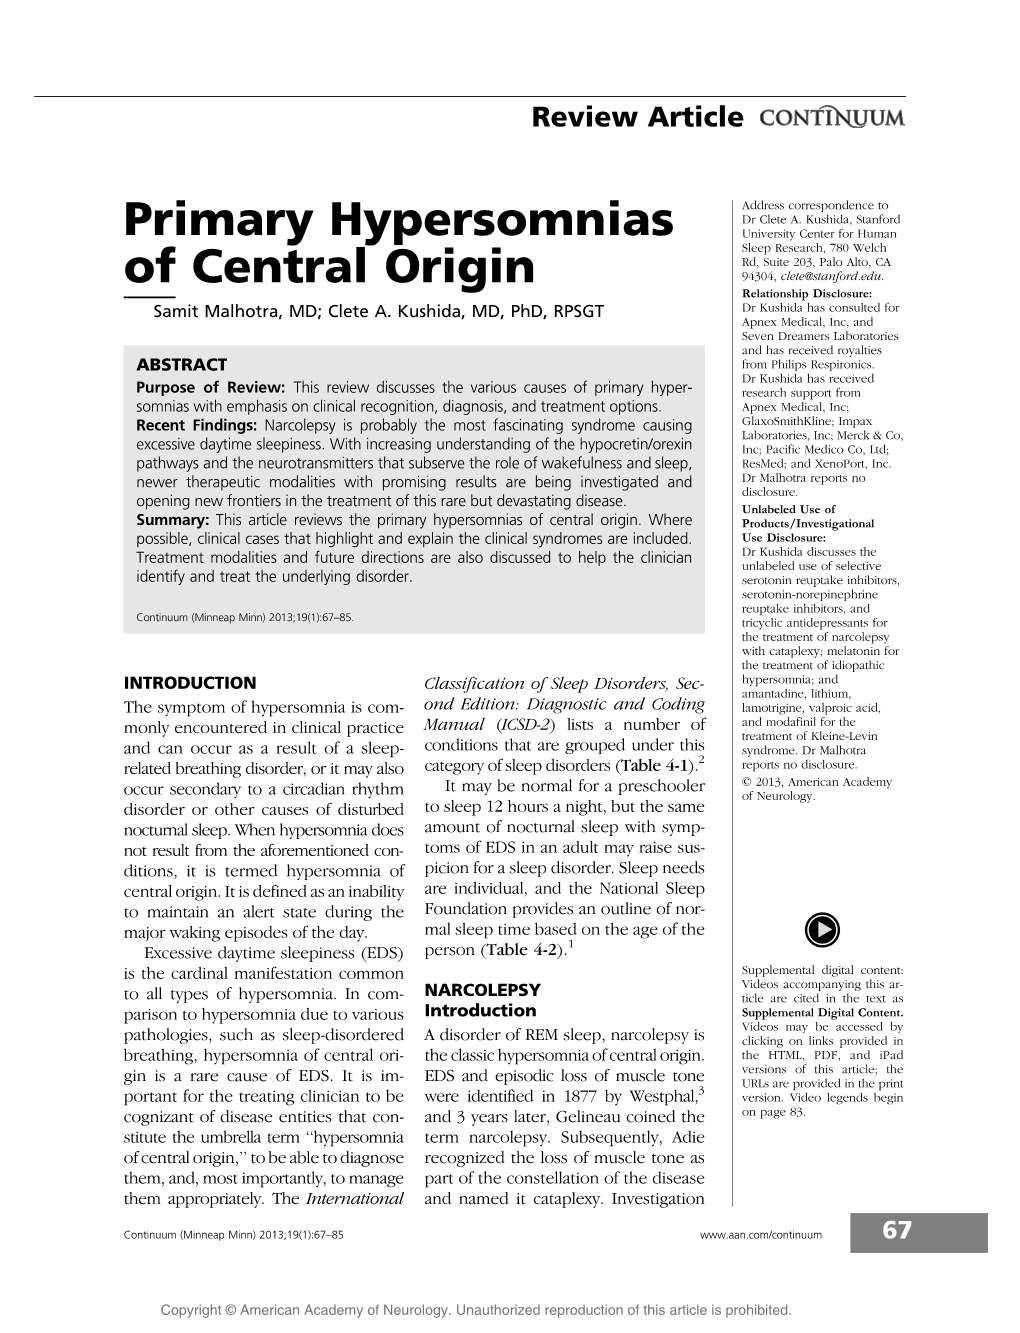 Primary Hypersomnias of Central Origin